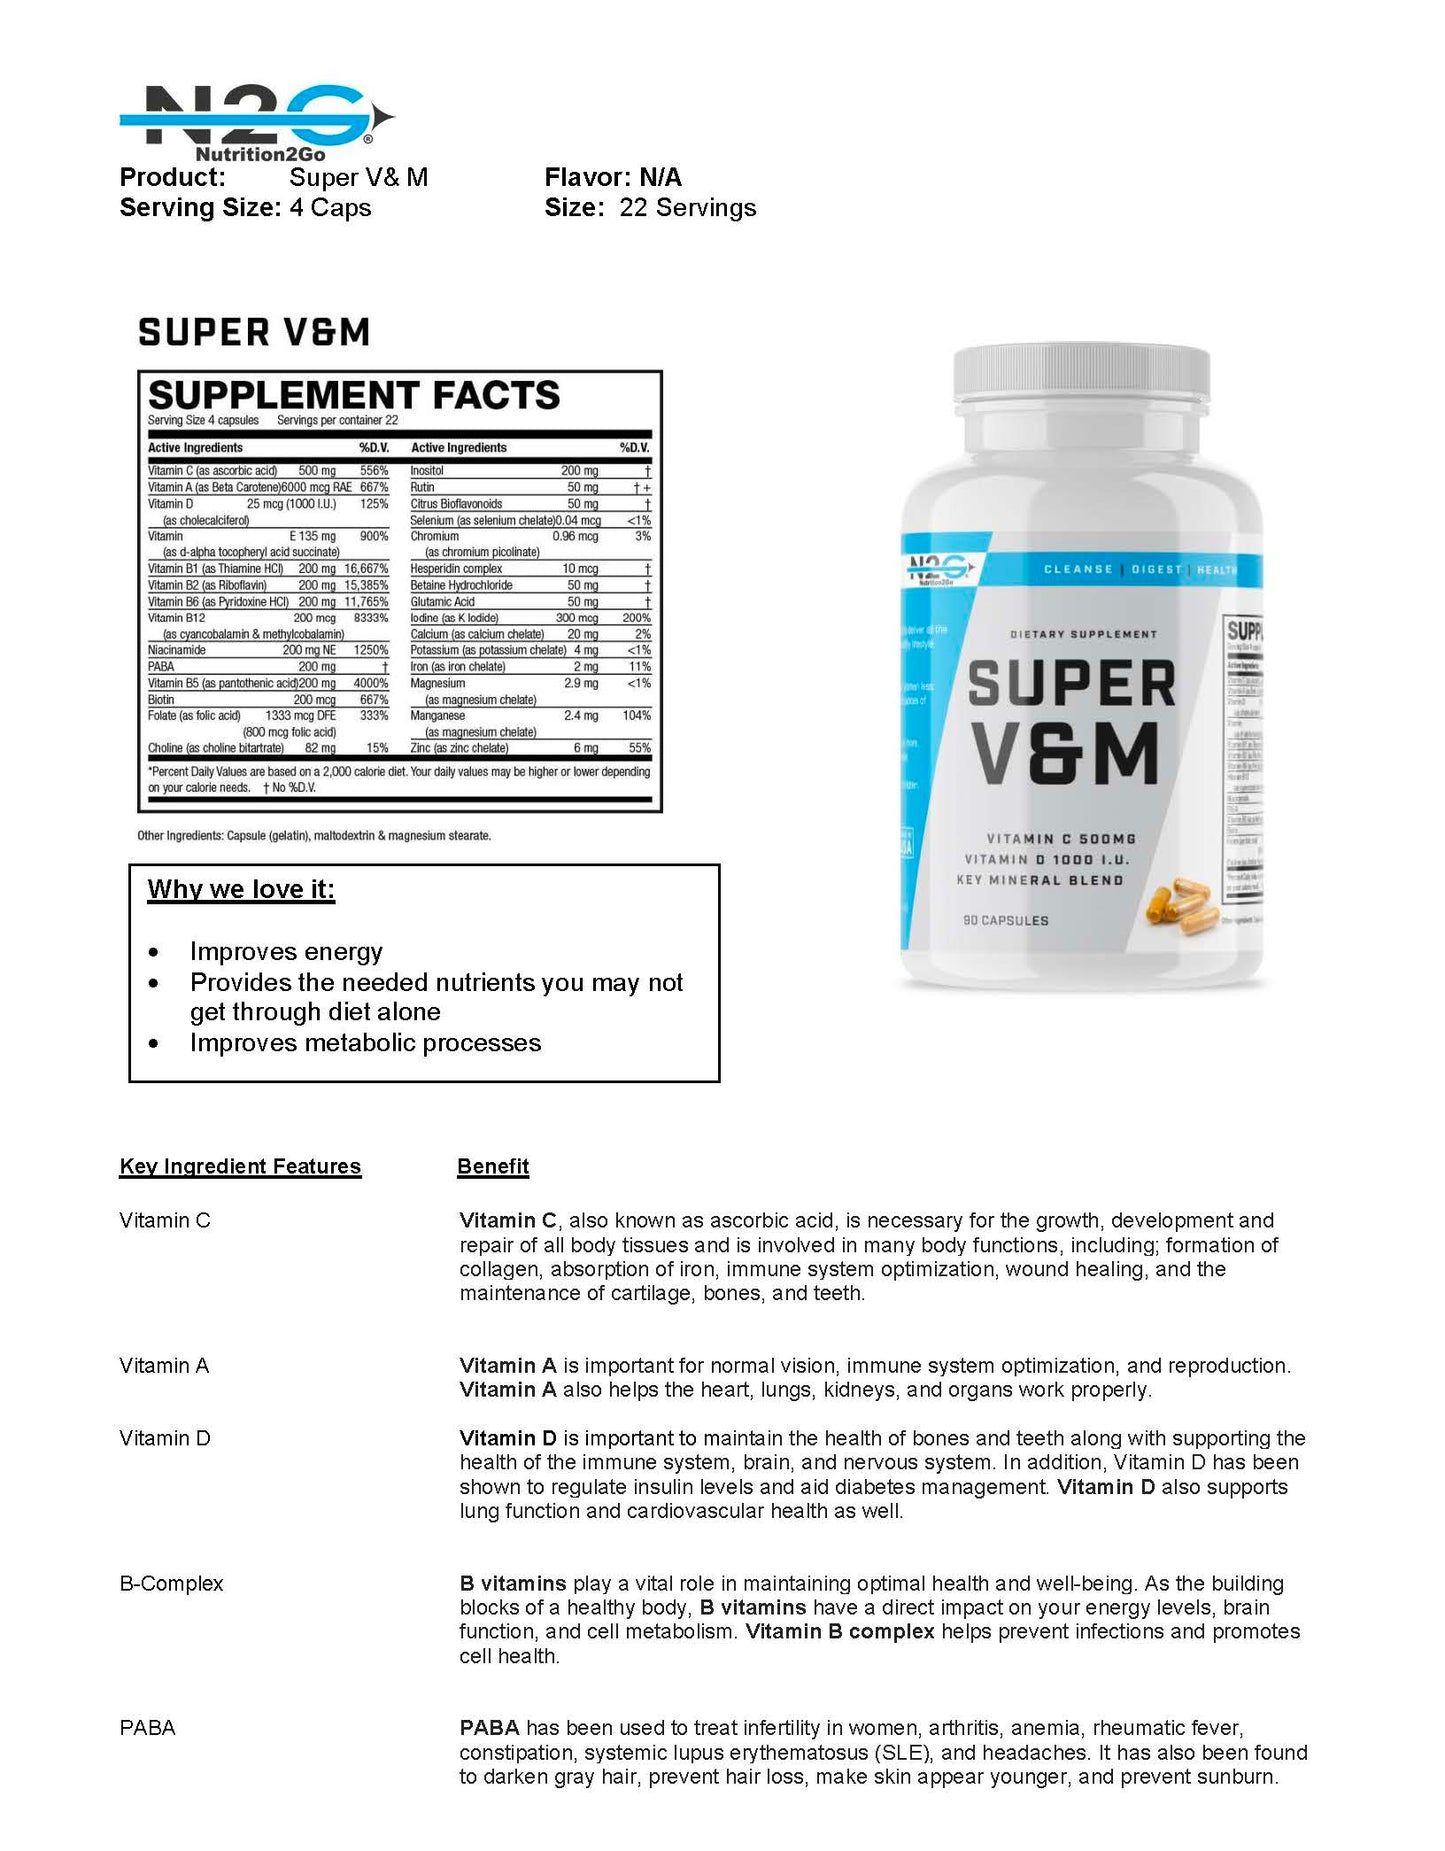 N2G Super V&M Fact Sheet